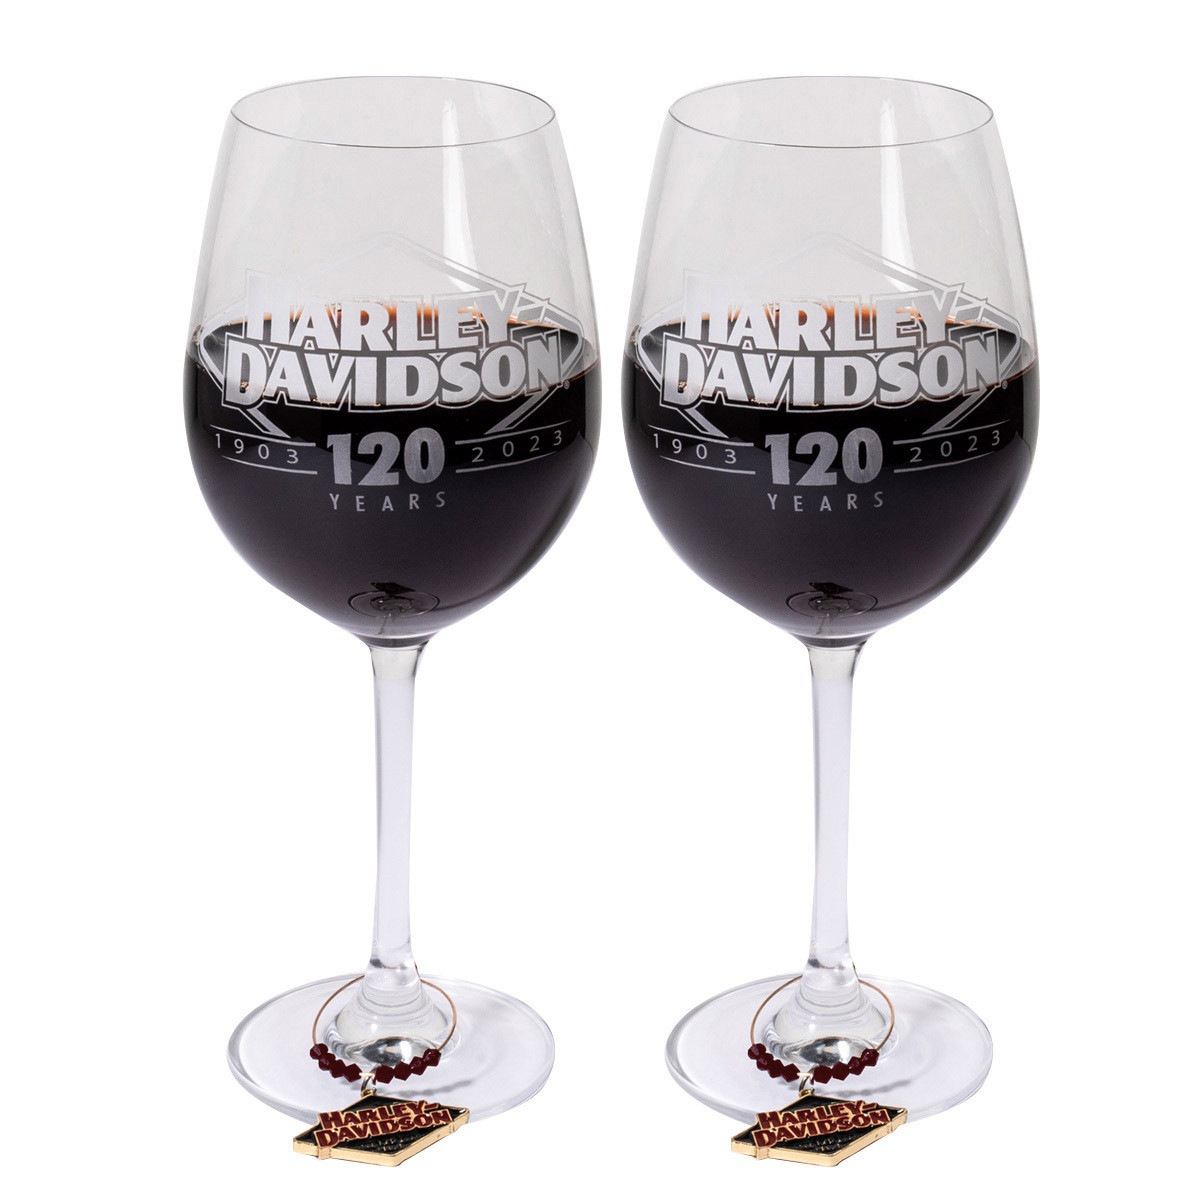 HARLEY DAVIDSON 120TH ANNIVERSARY WINE GLASS SET